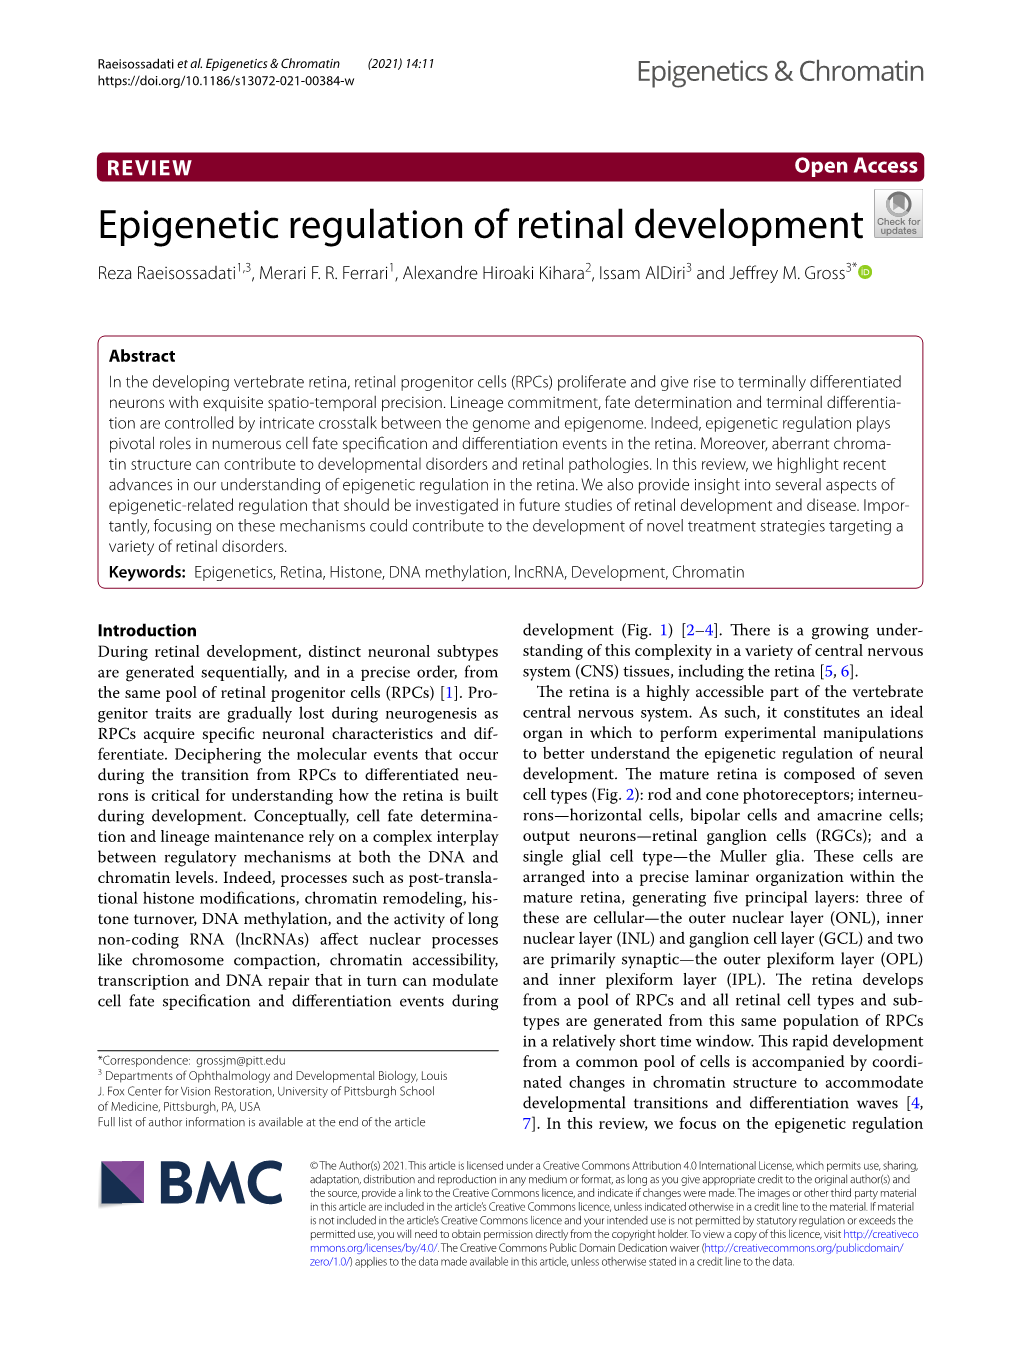 Epigenetic Regulation of Retinal Development Reza Raeisossadati1,3, Merari F